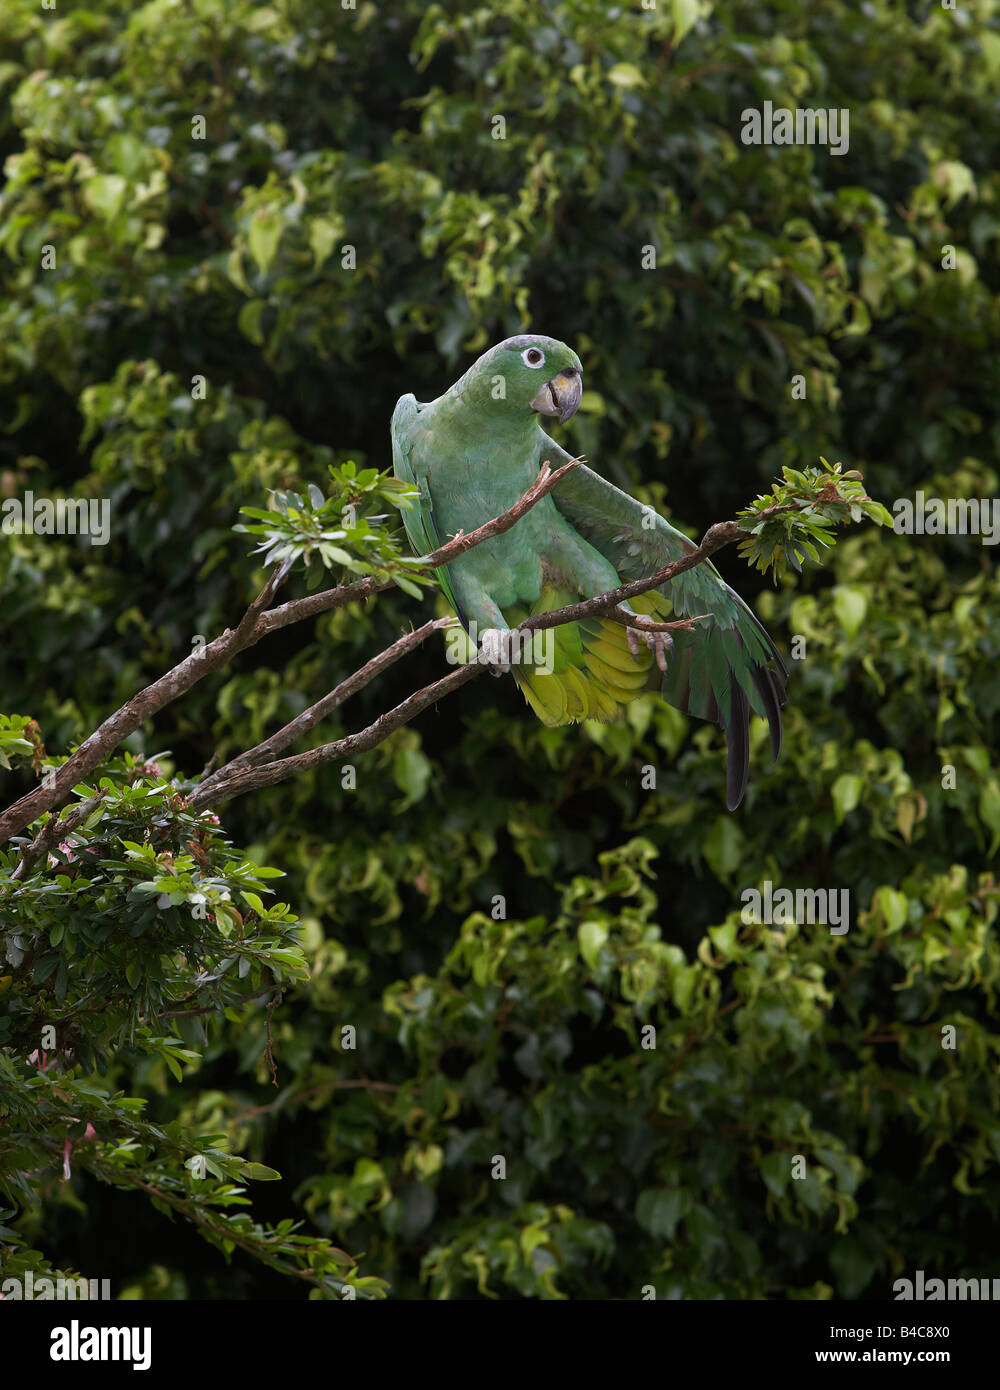 Parrot in the wild, Amazon Rain Forest, Ecuador Stock Photo